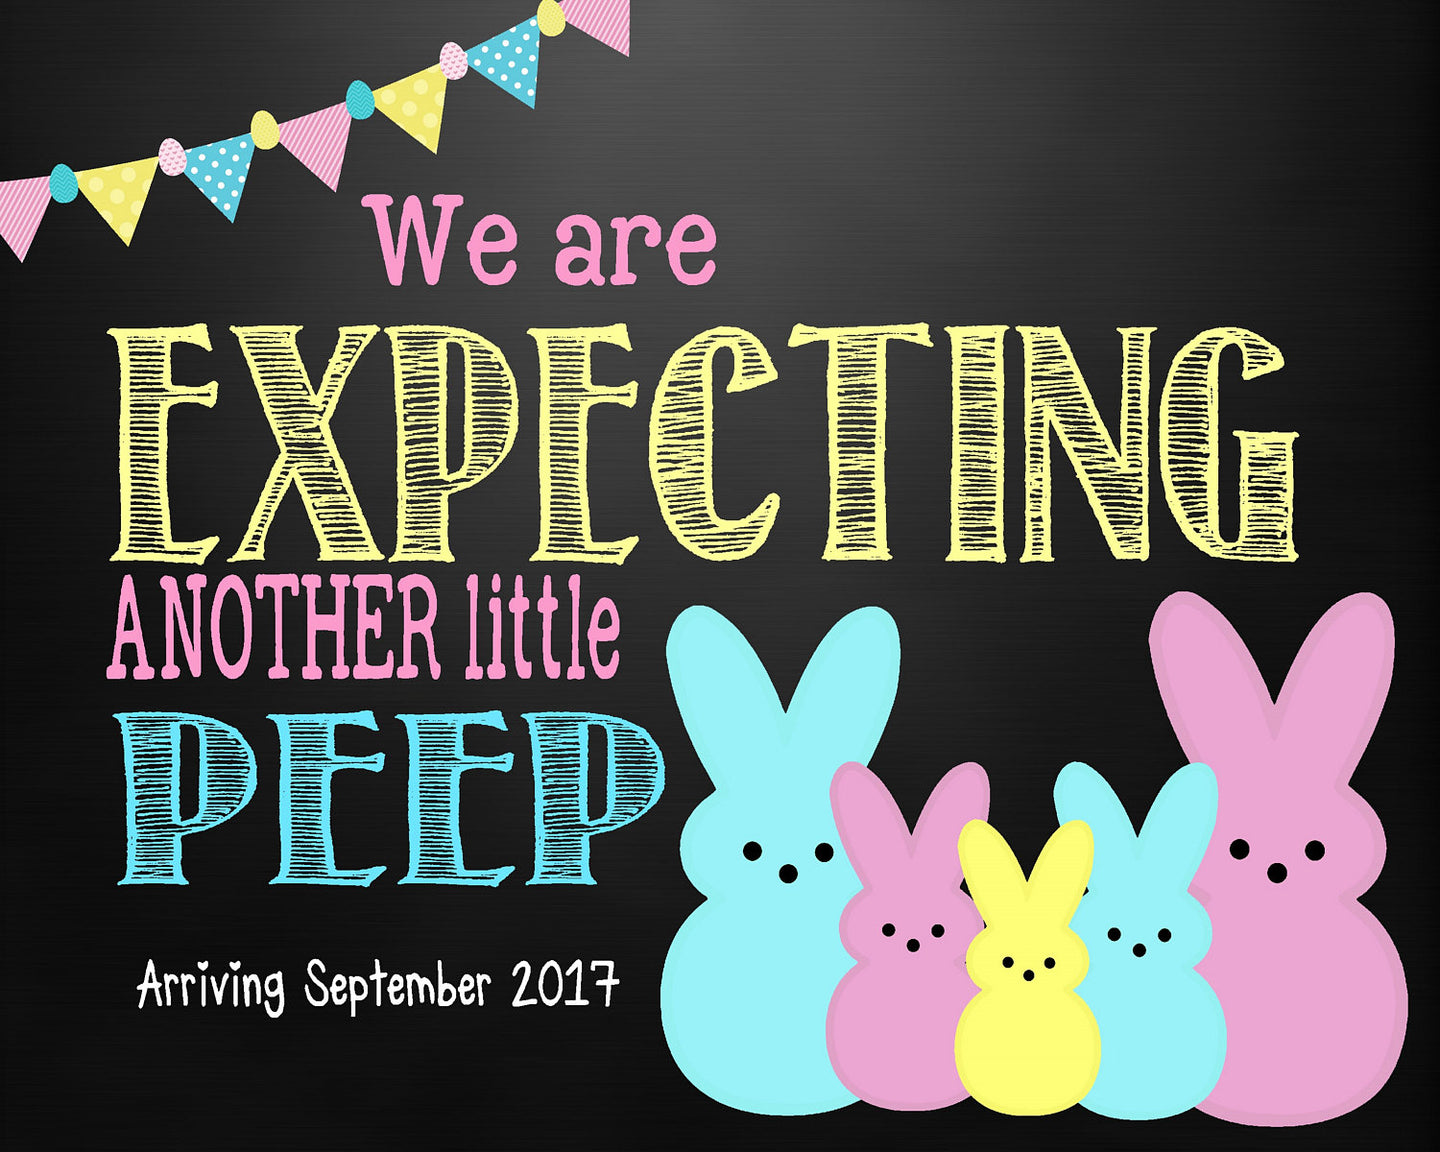 Easter Pregnancy Announcement Easter Announcement Easter Pregnancy Reveal | easter peeps Growing Family Easter Egg Hunt